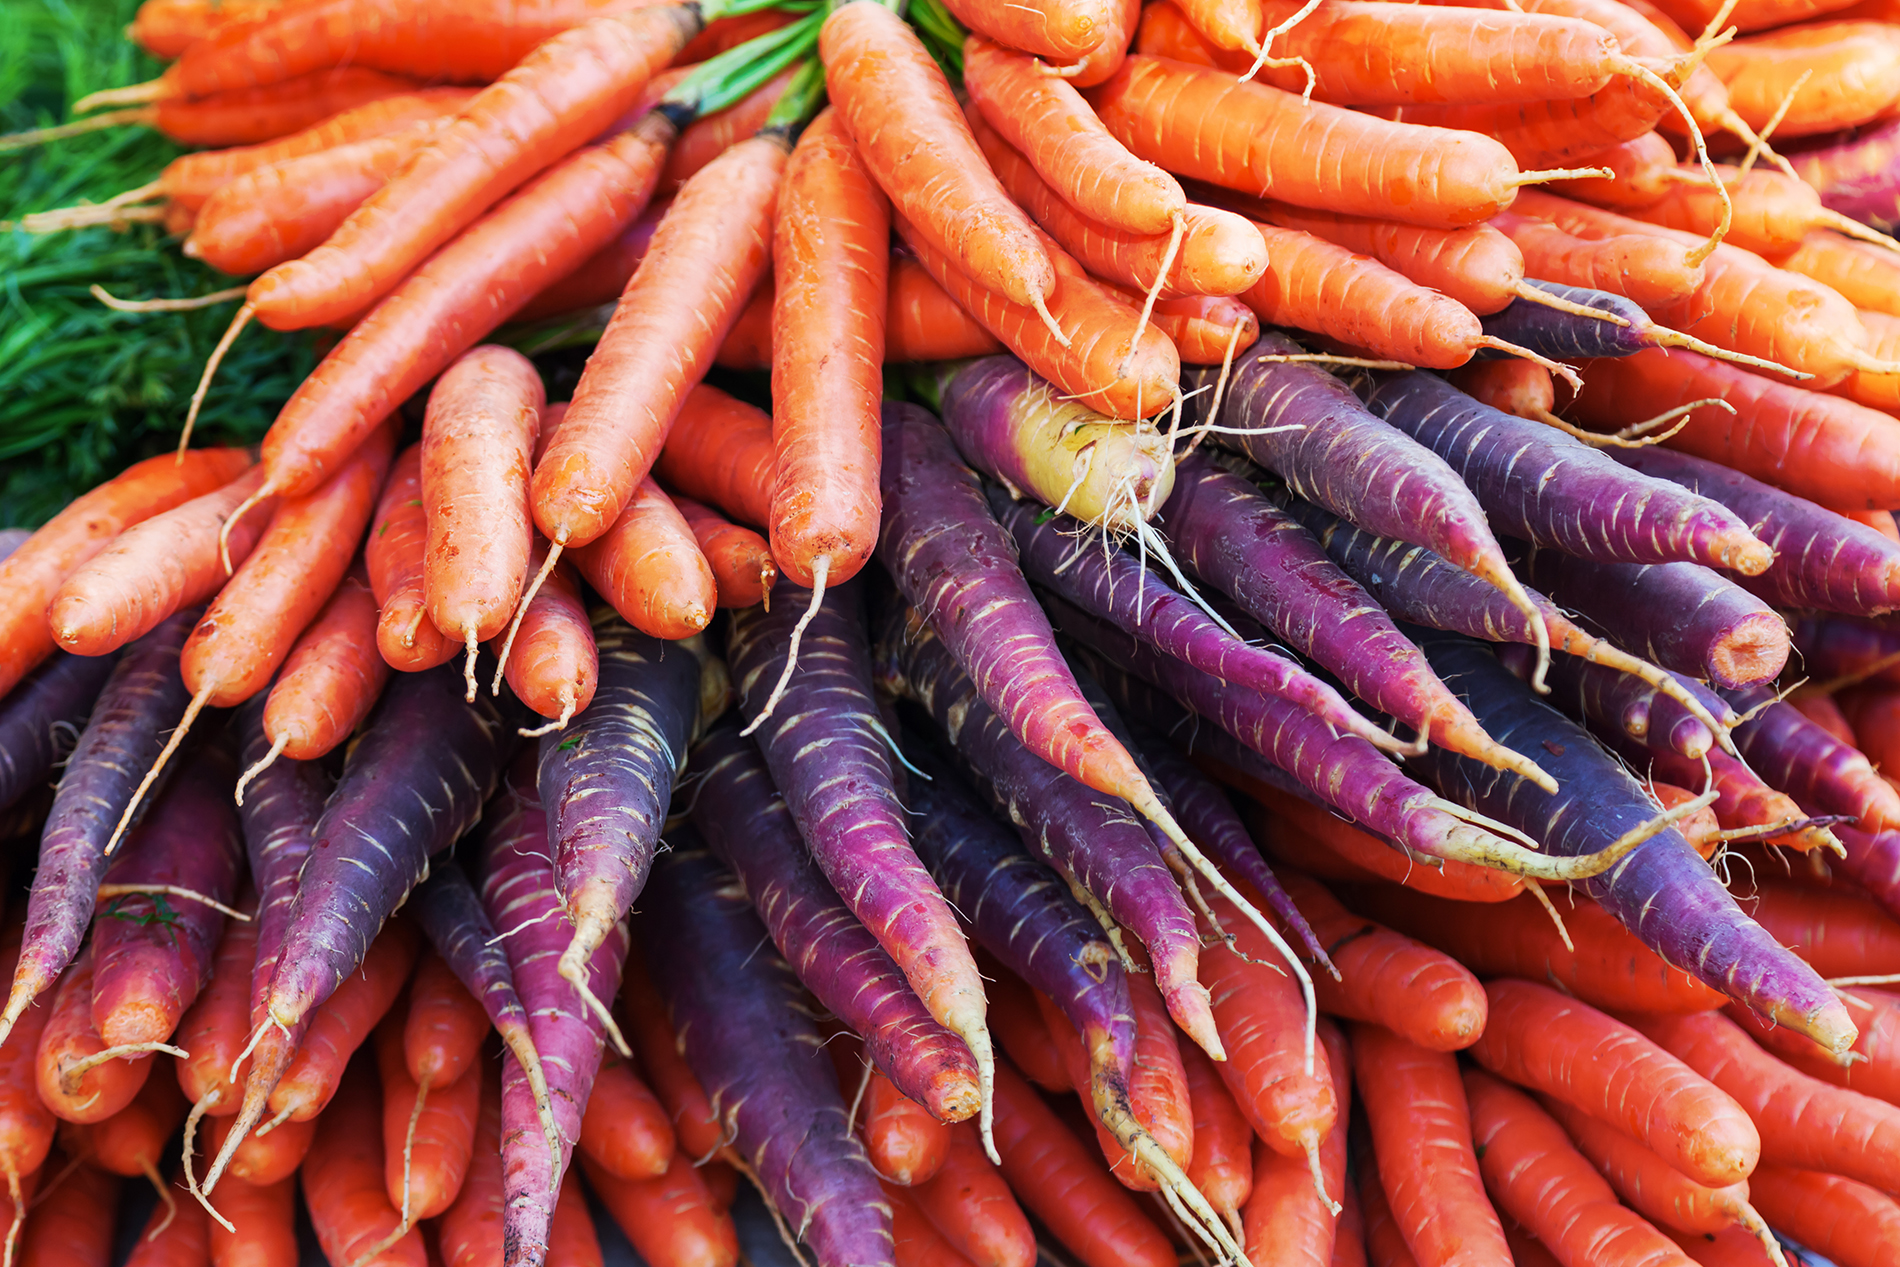 Yellow, orange and purple carrots